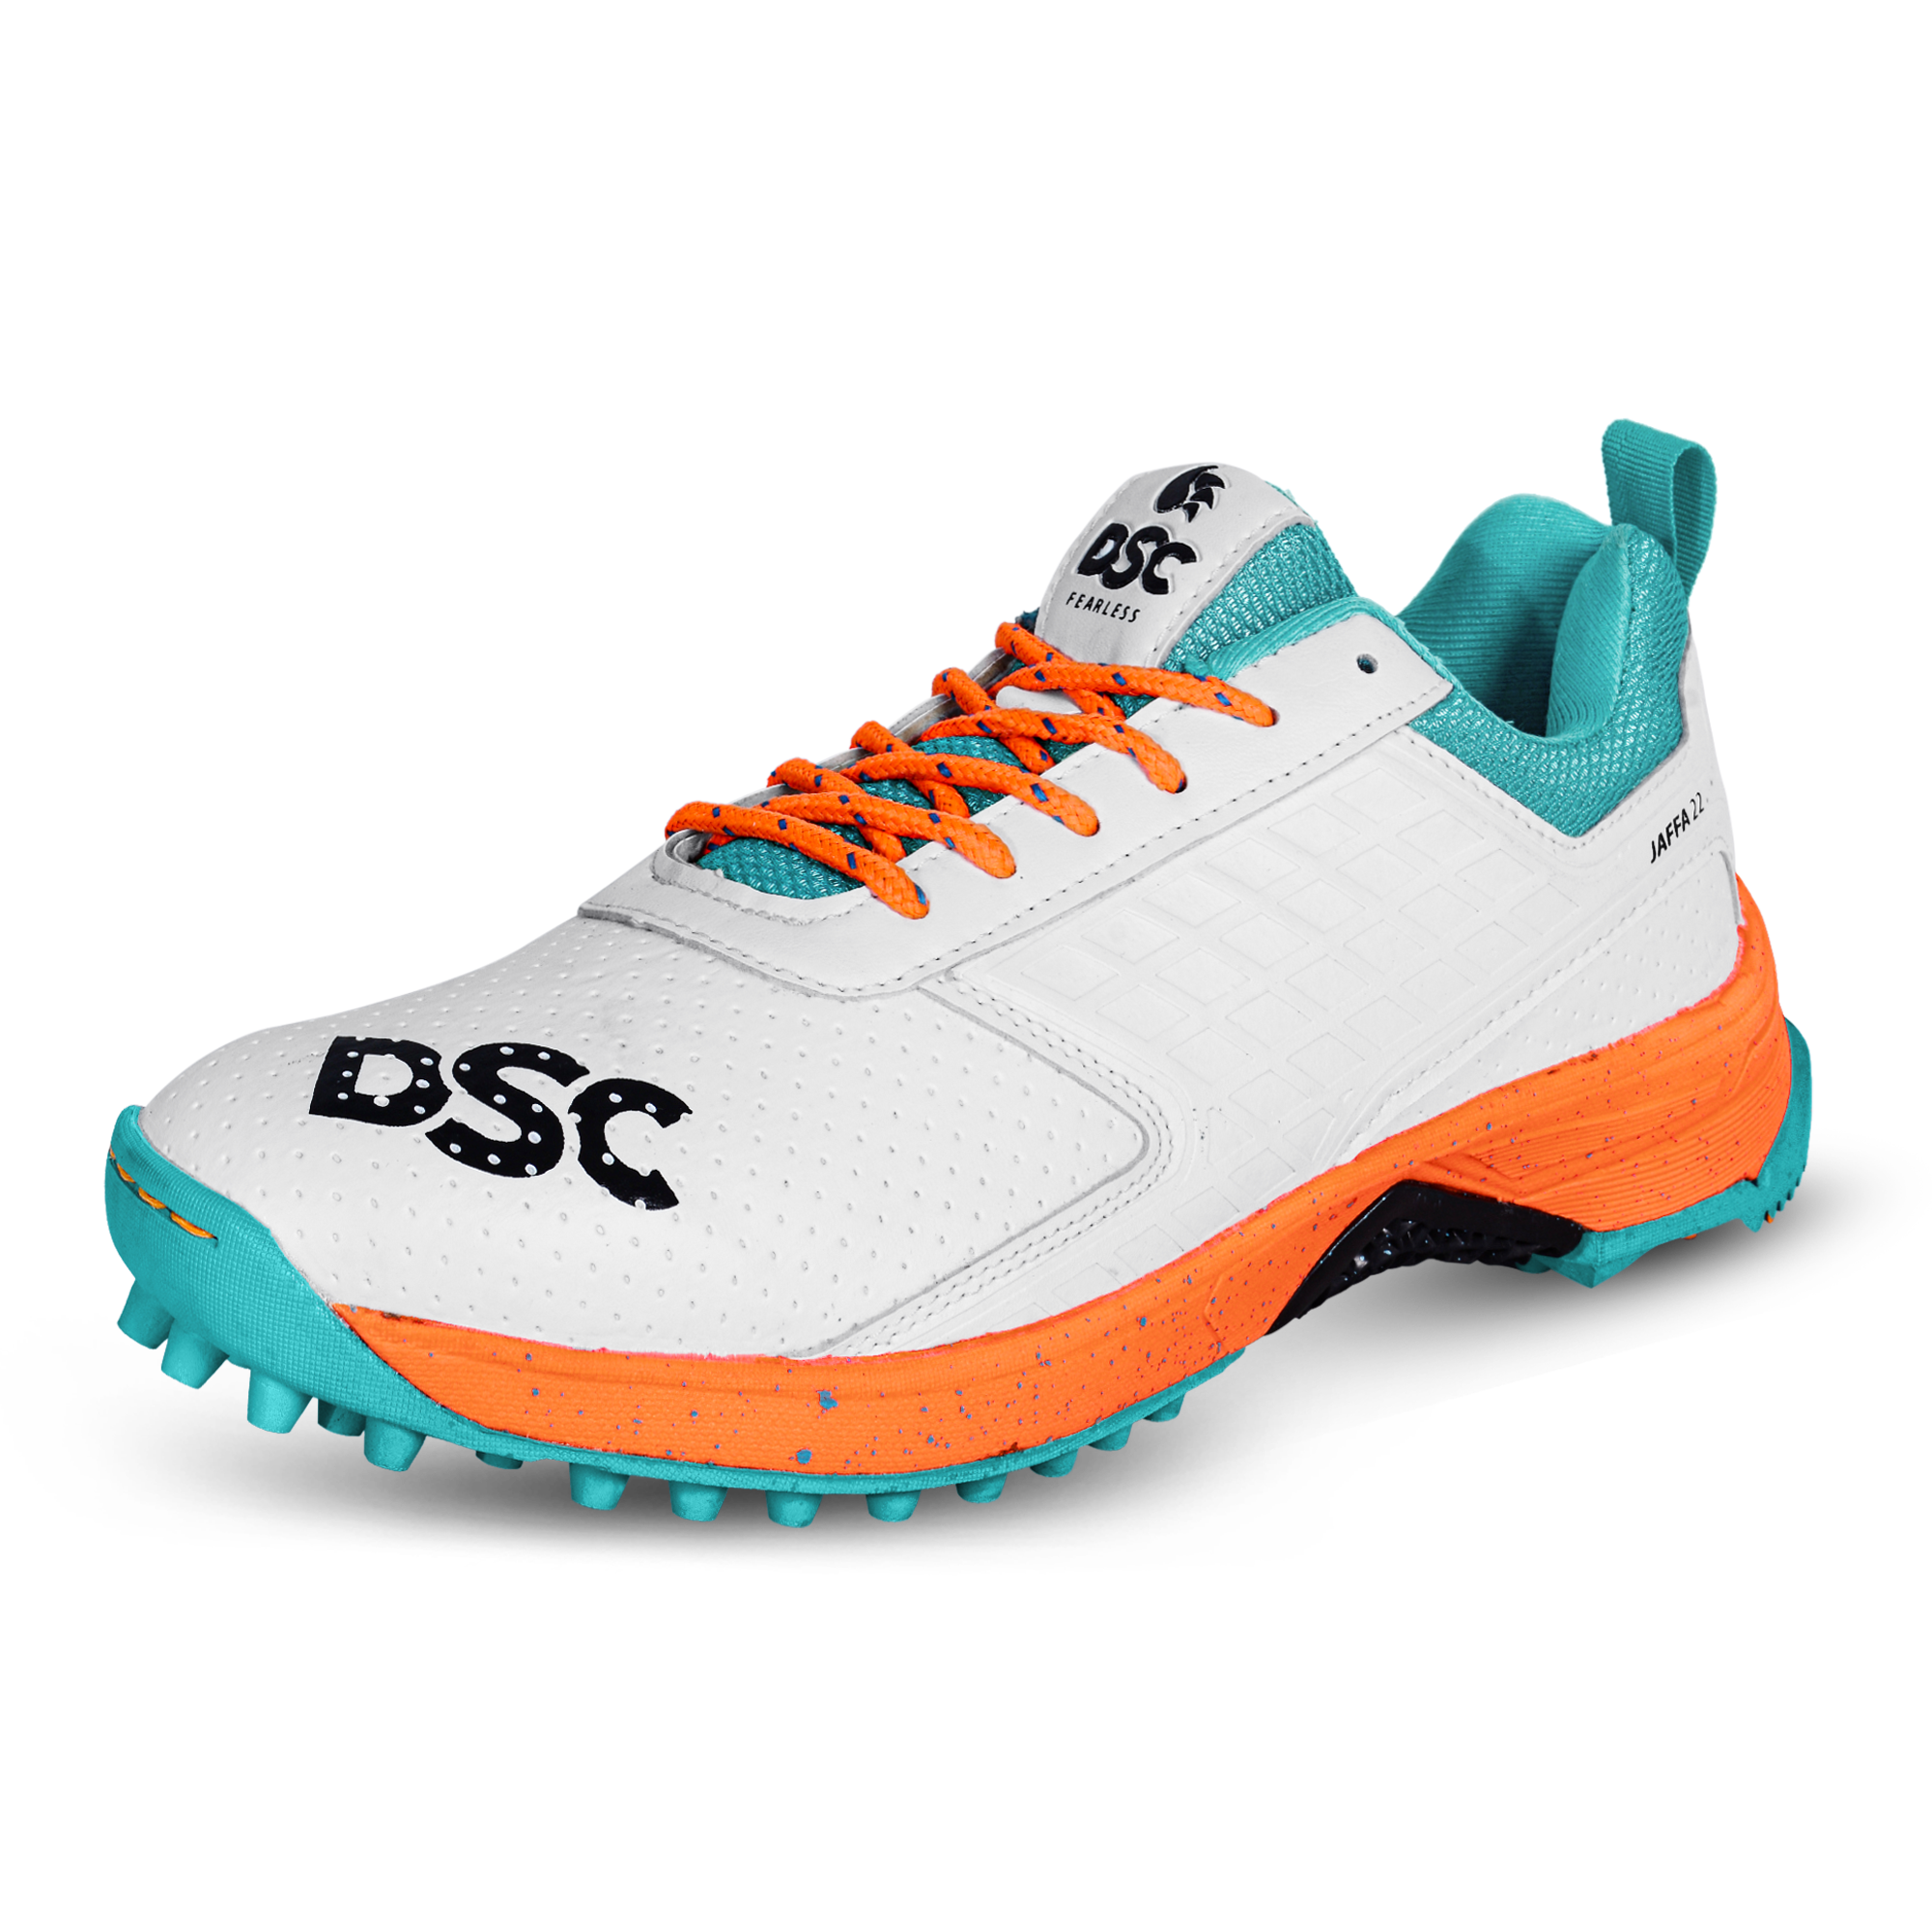 DSC JAFFA 22 Rubber Cricket Shoes White-Orange-Teal